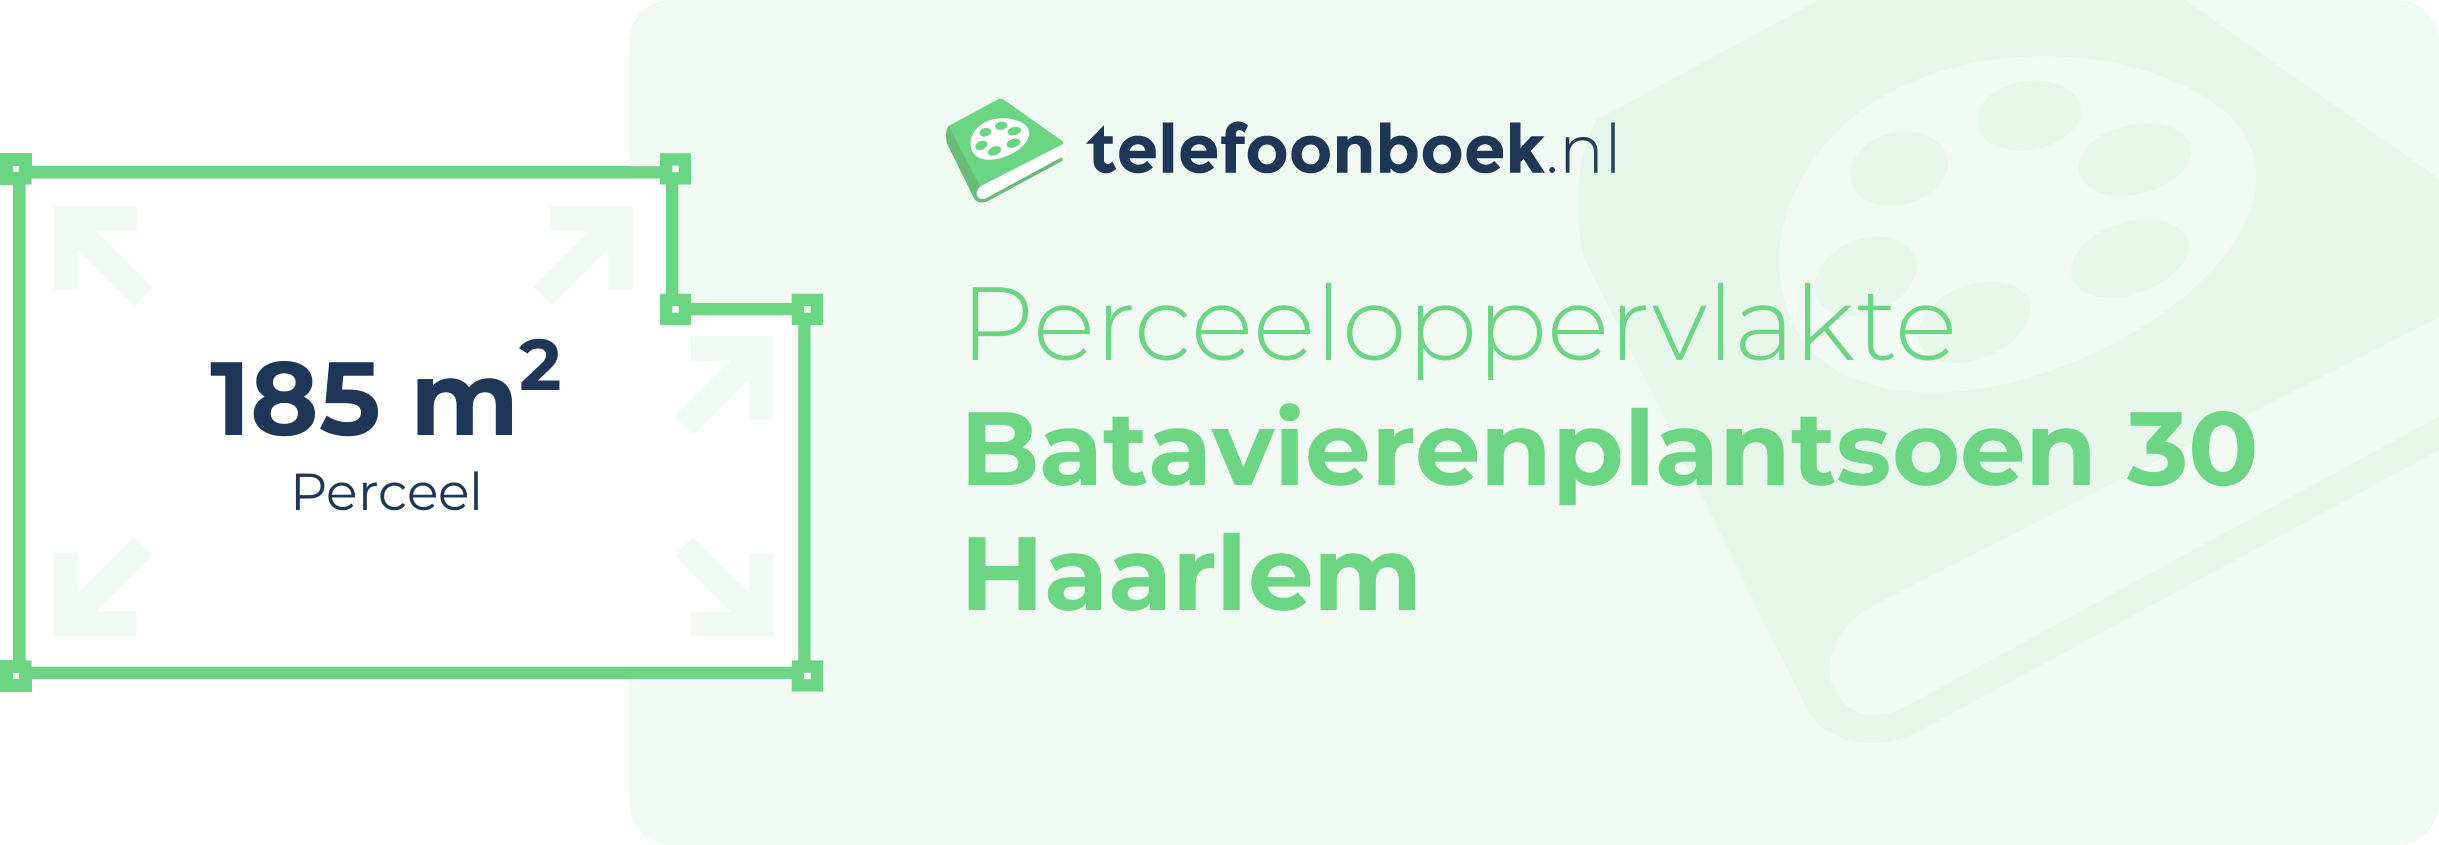 Perceeloppervlakte Batavierenplantsoen 30 Haarlem